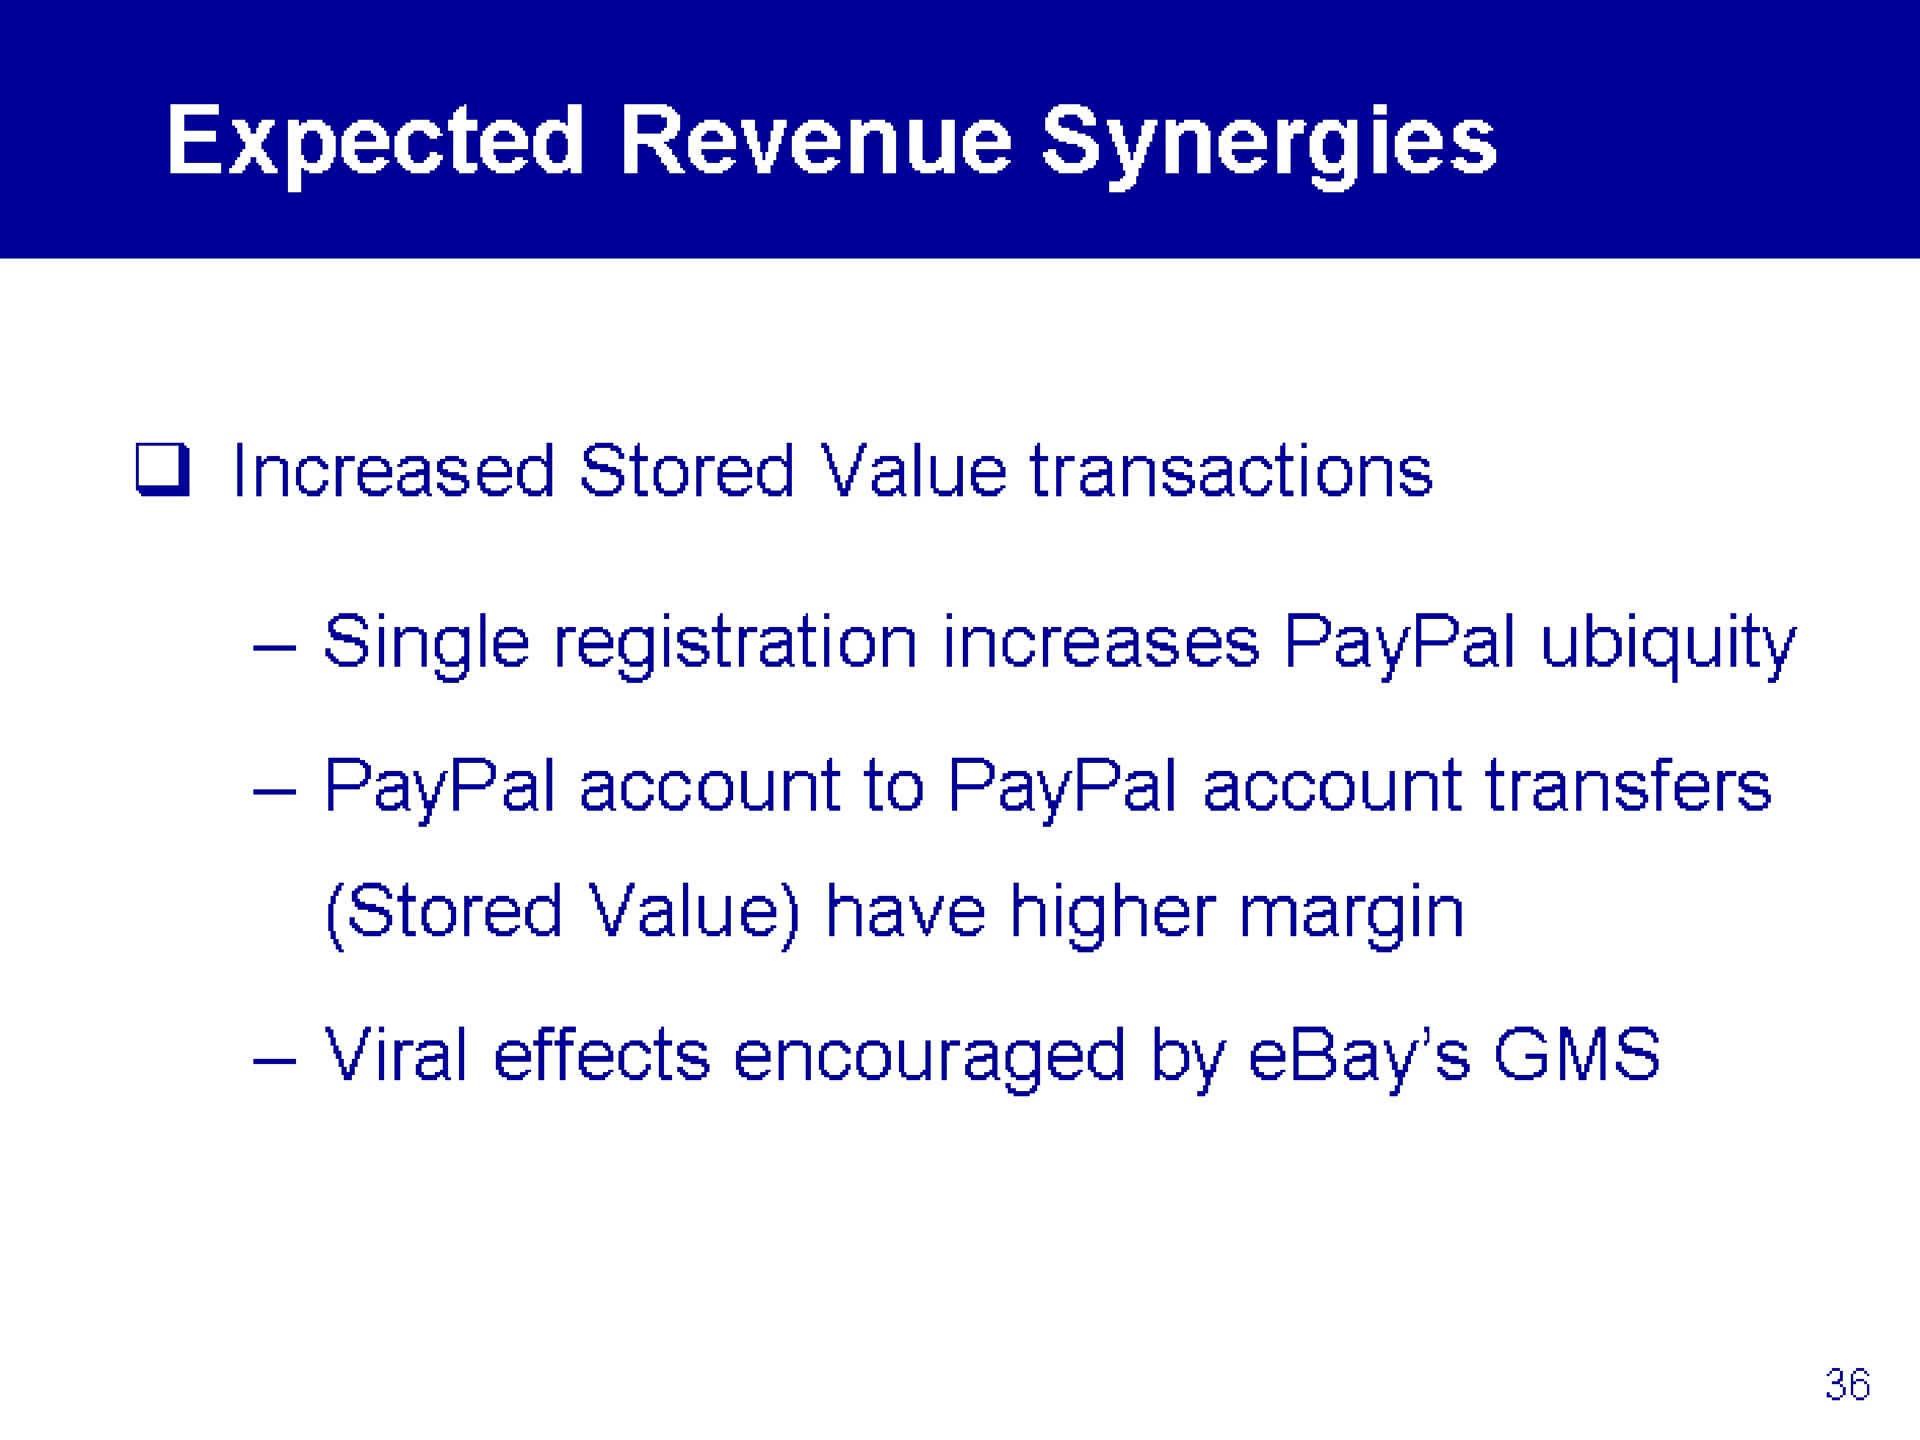 expected revenue synergies | eBay